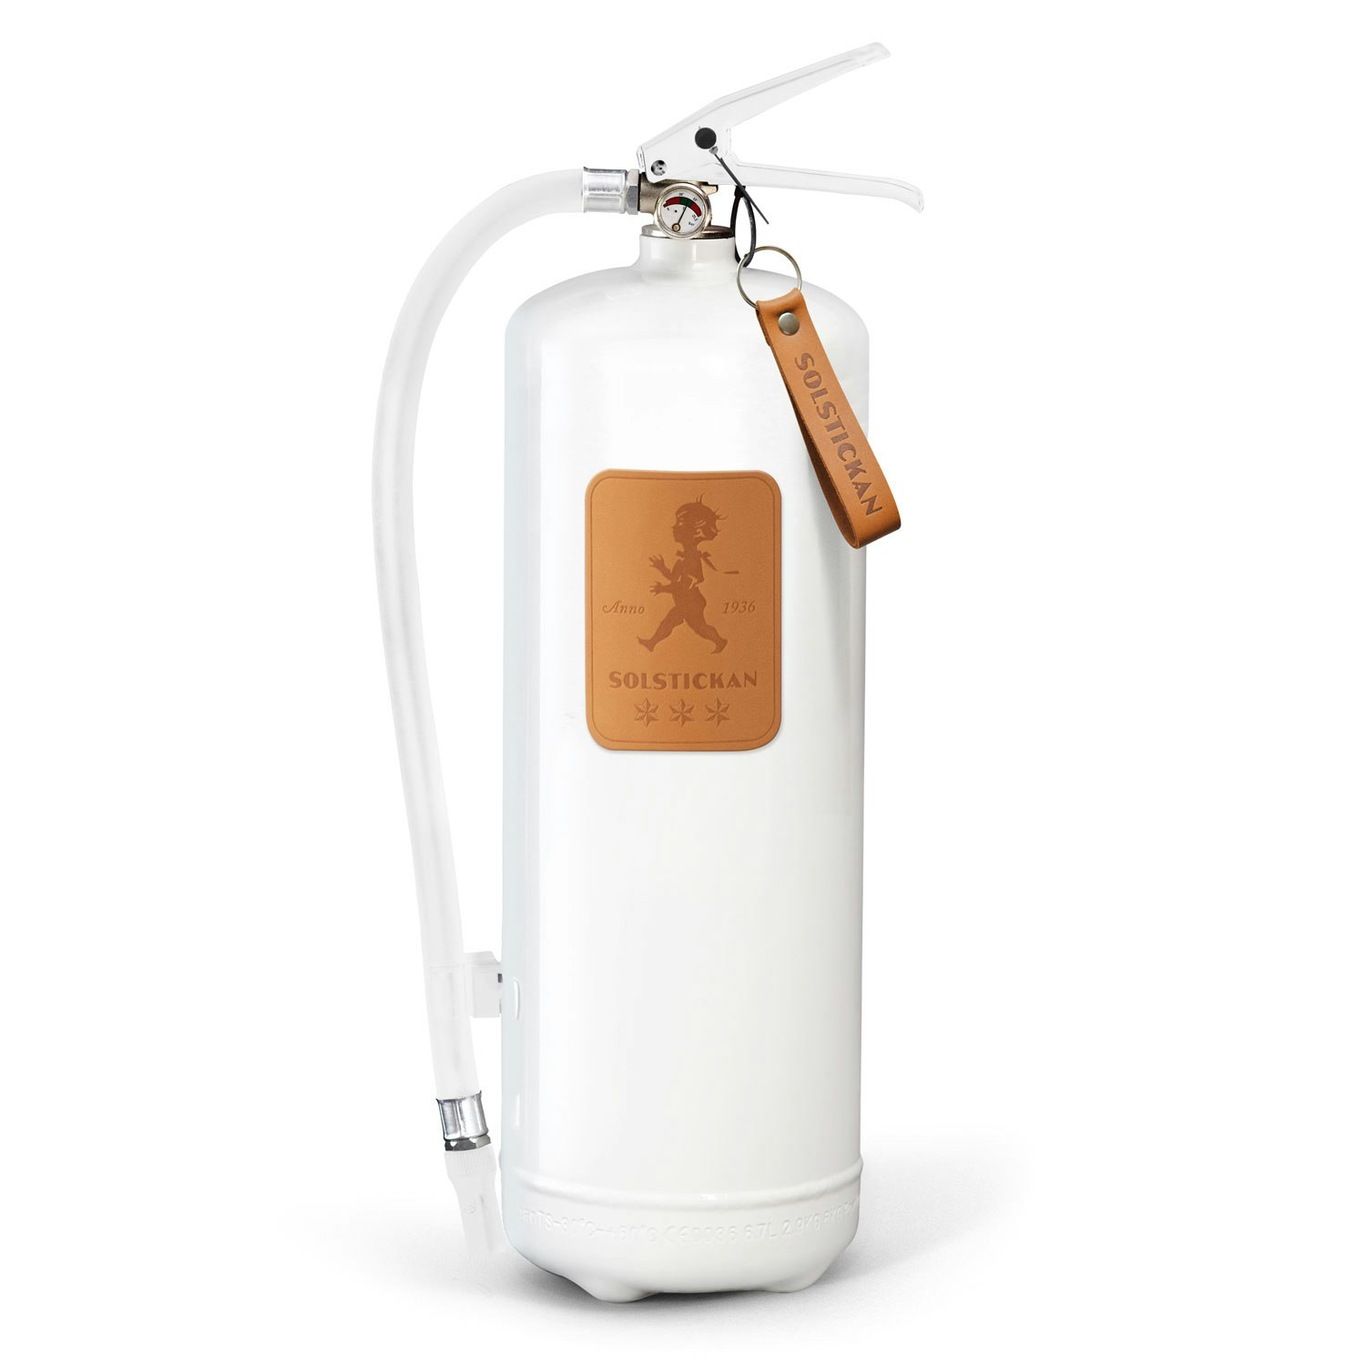 Solstickan Fire Extinguisher 6 kg, Light Leather